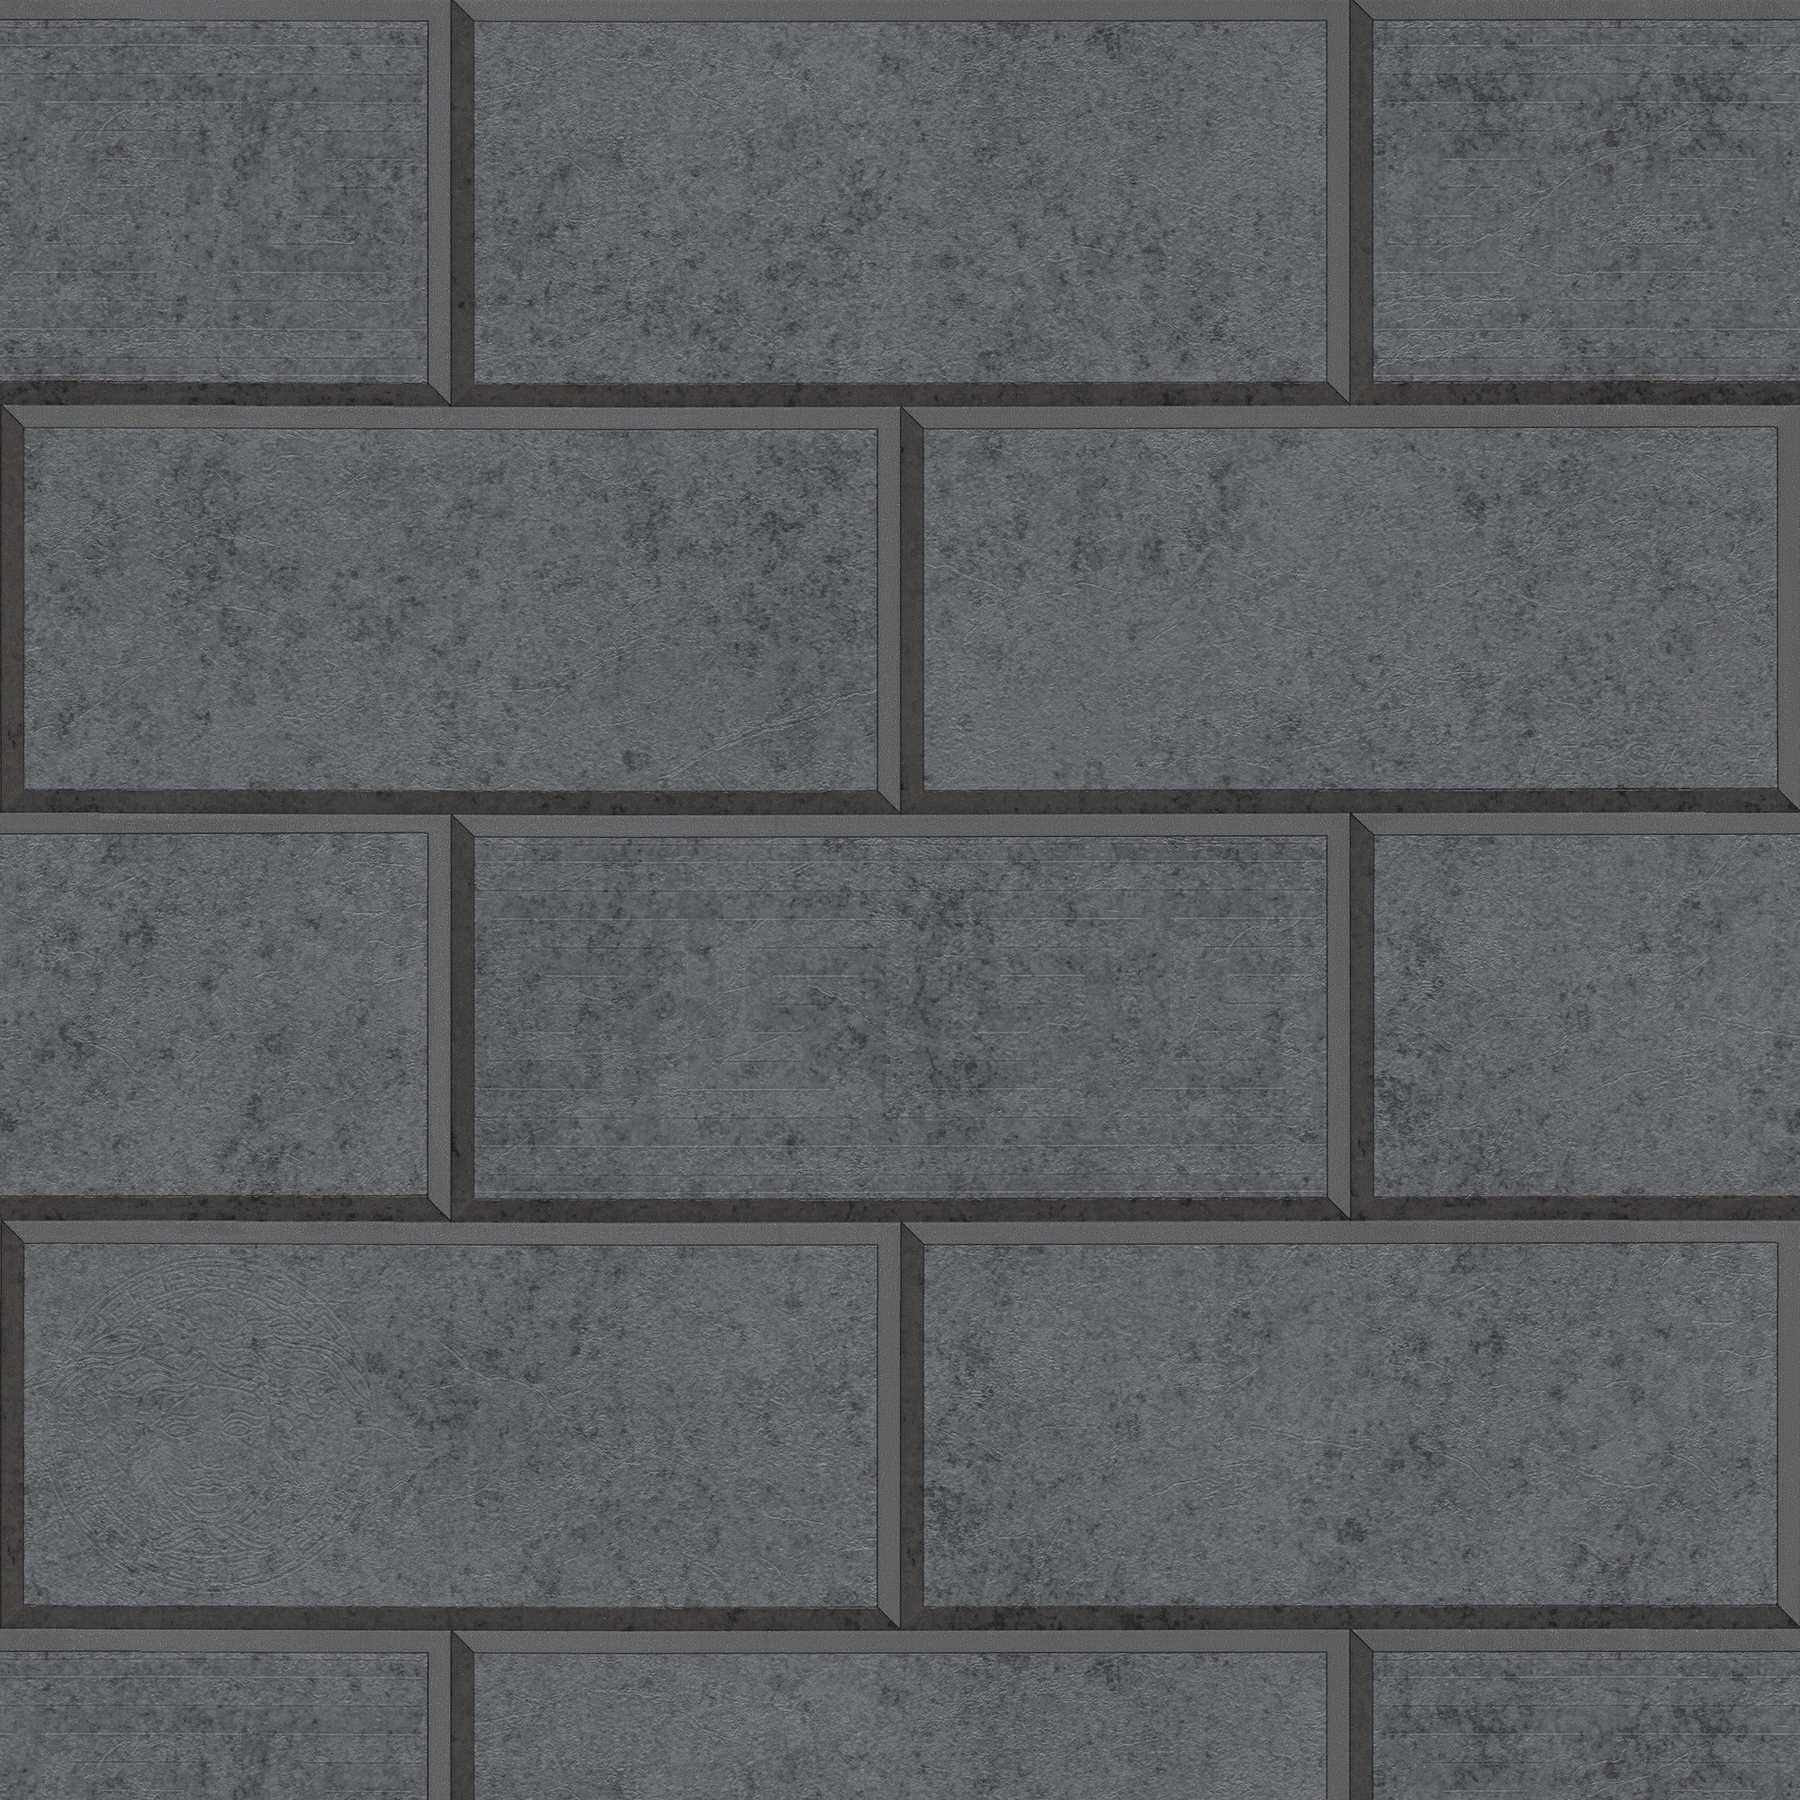             Wallpaper anthracite stone look 3D masonry - grey
        